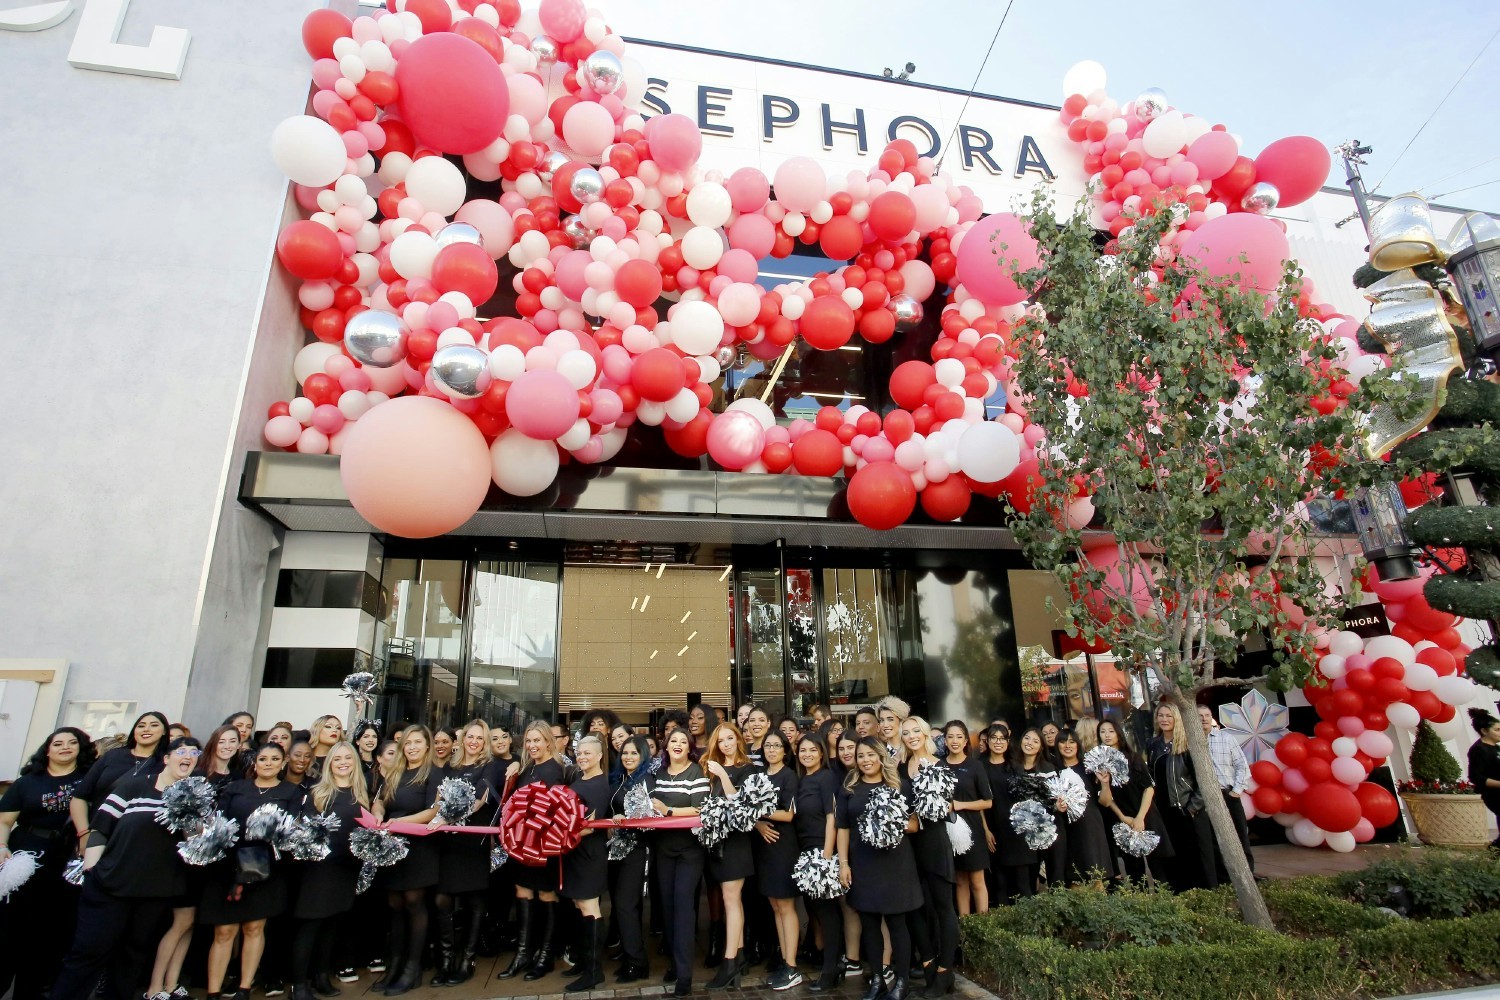 Sephora employees celebrating a store opening.